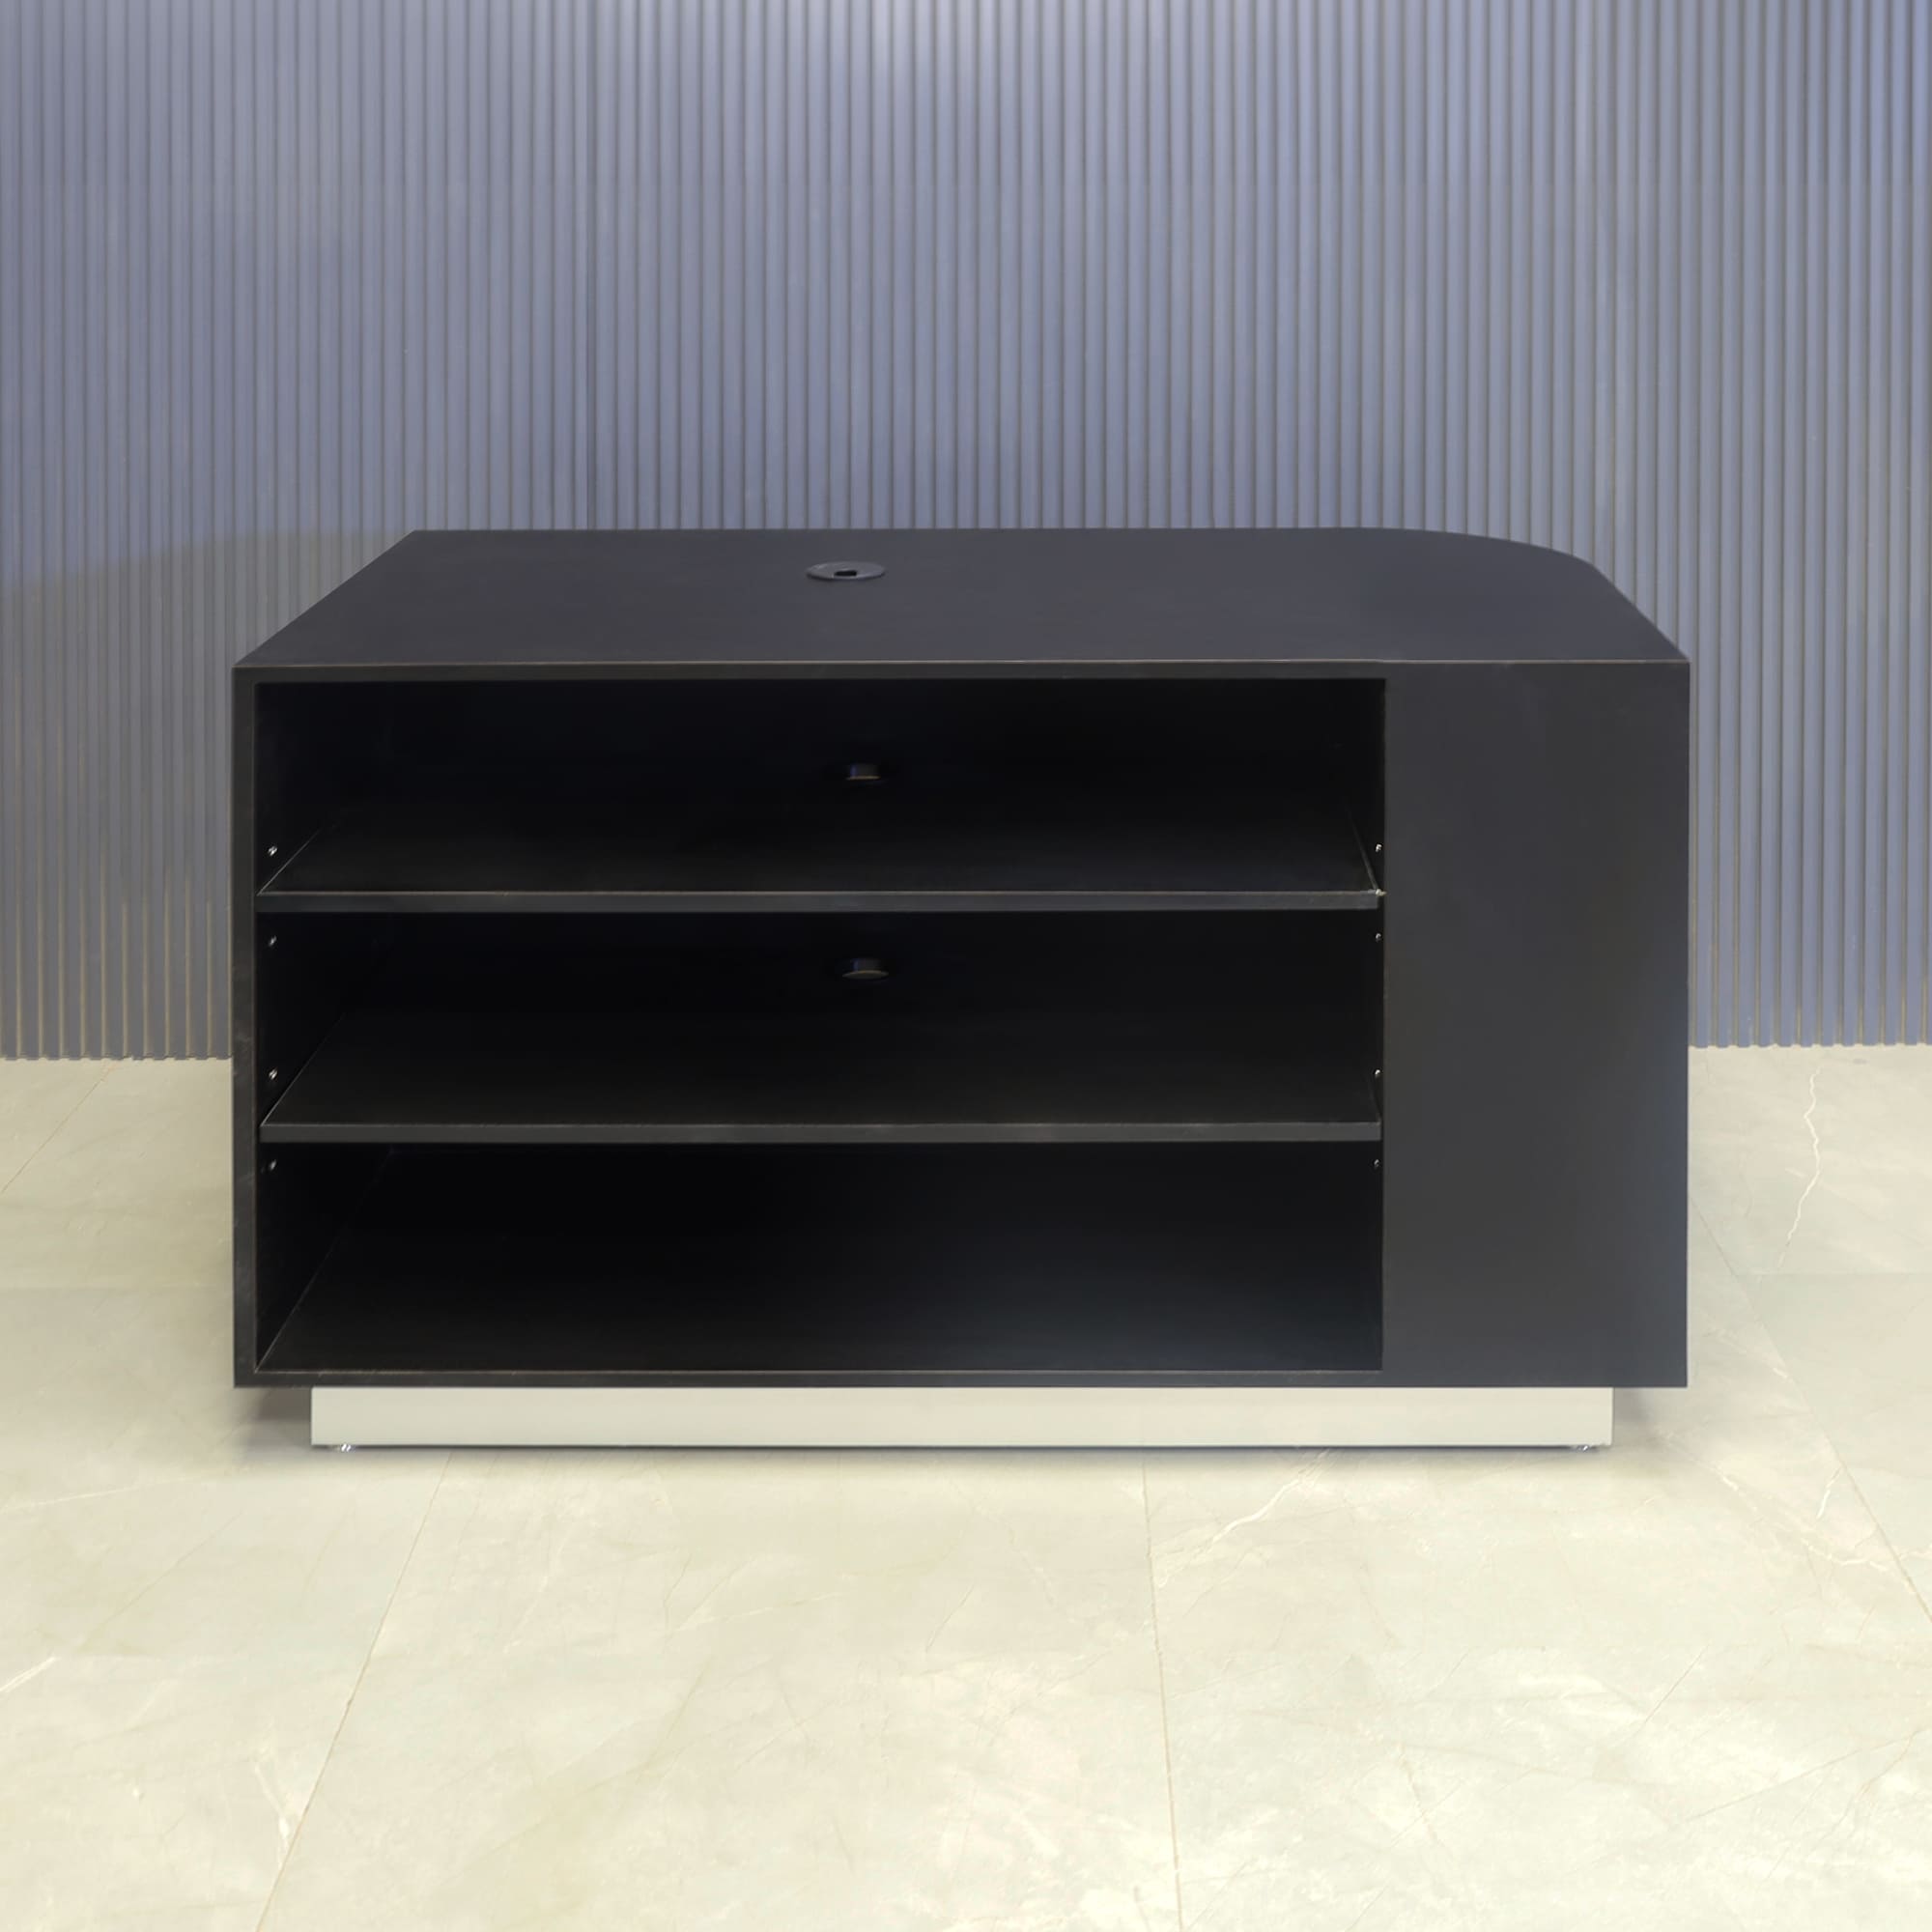 48-inch Nola Retail Custom Reception Desk in black matte laminate main desk and shelves, with brushed aluminum toe-kick, shown here.